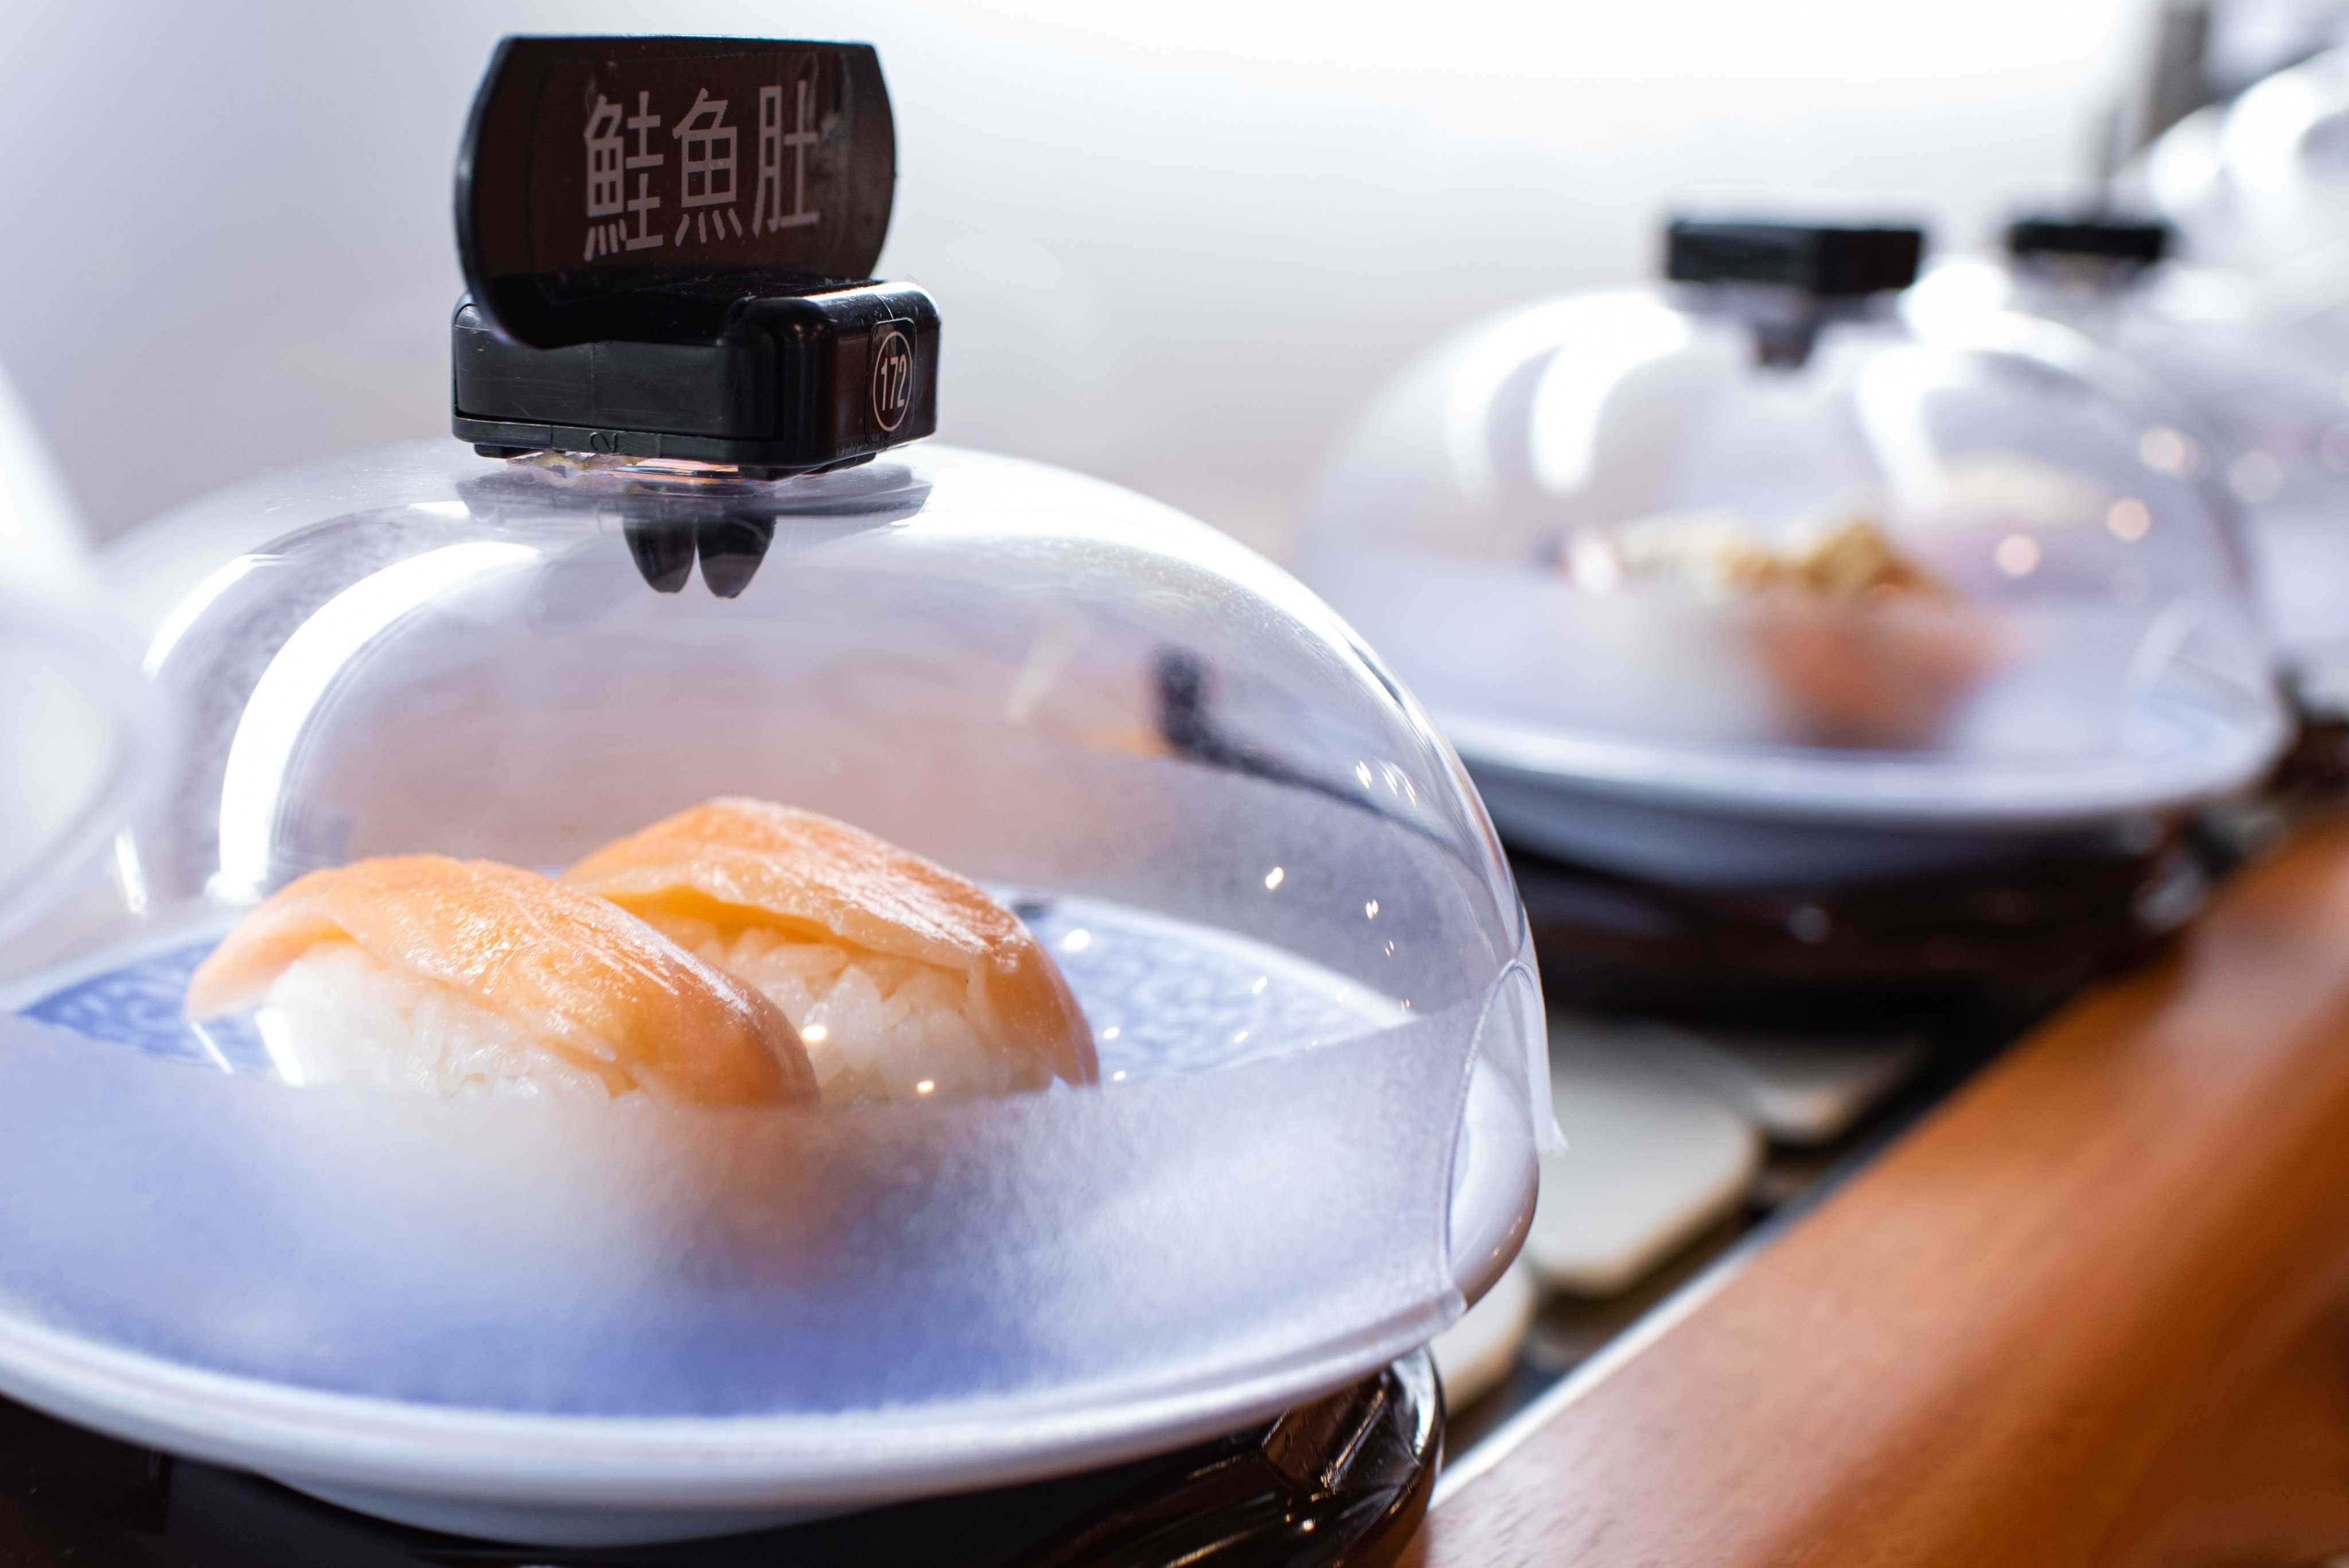 Salmon sushi at a conveyor-belt sushi restaurant in Japan. Photo: Shutterstock